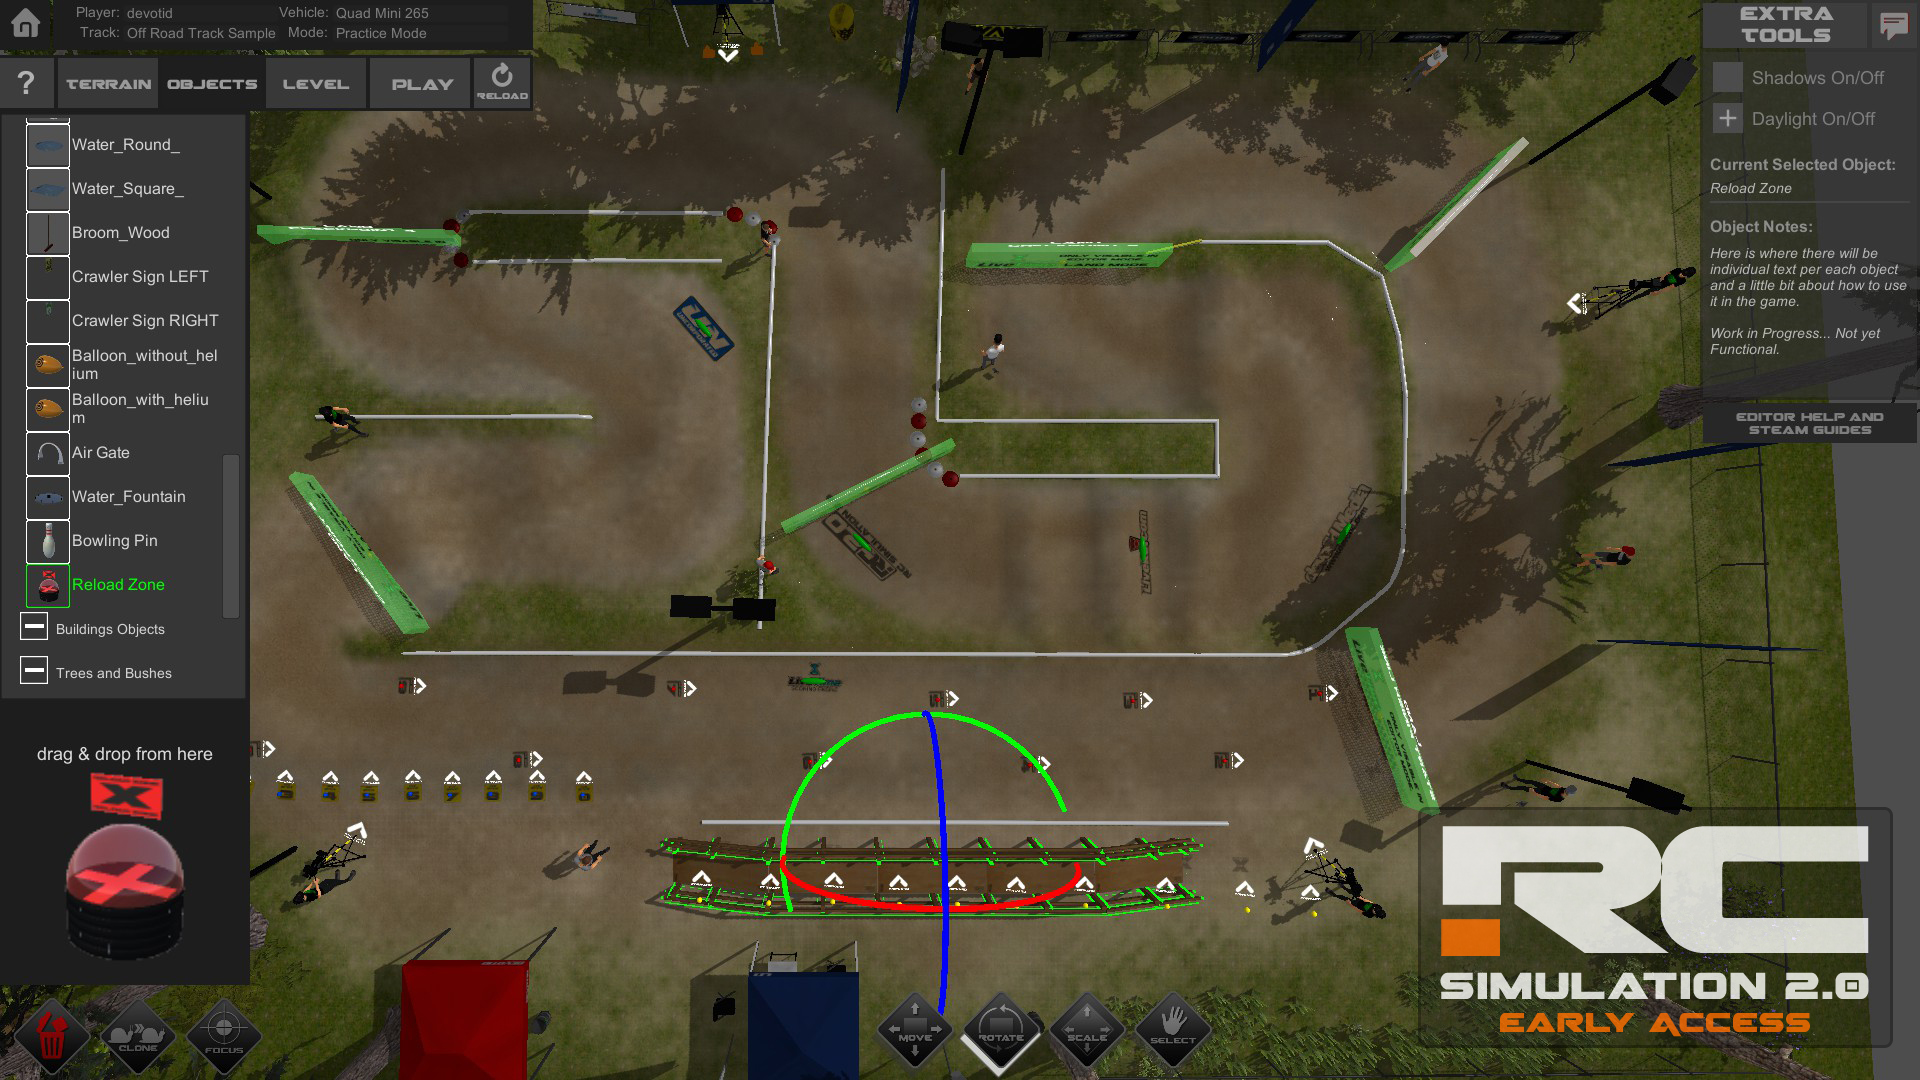 RC Simulation 2.0 screenshot